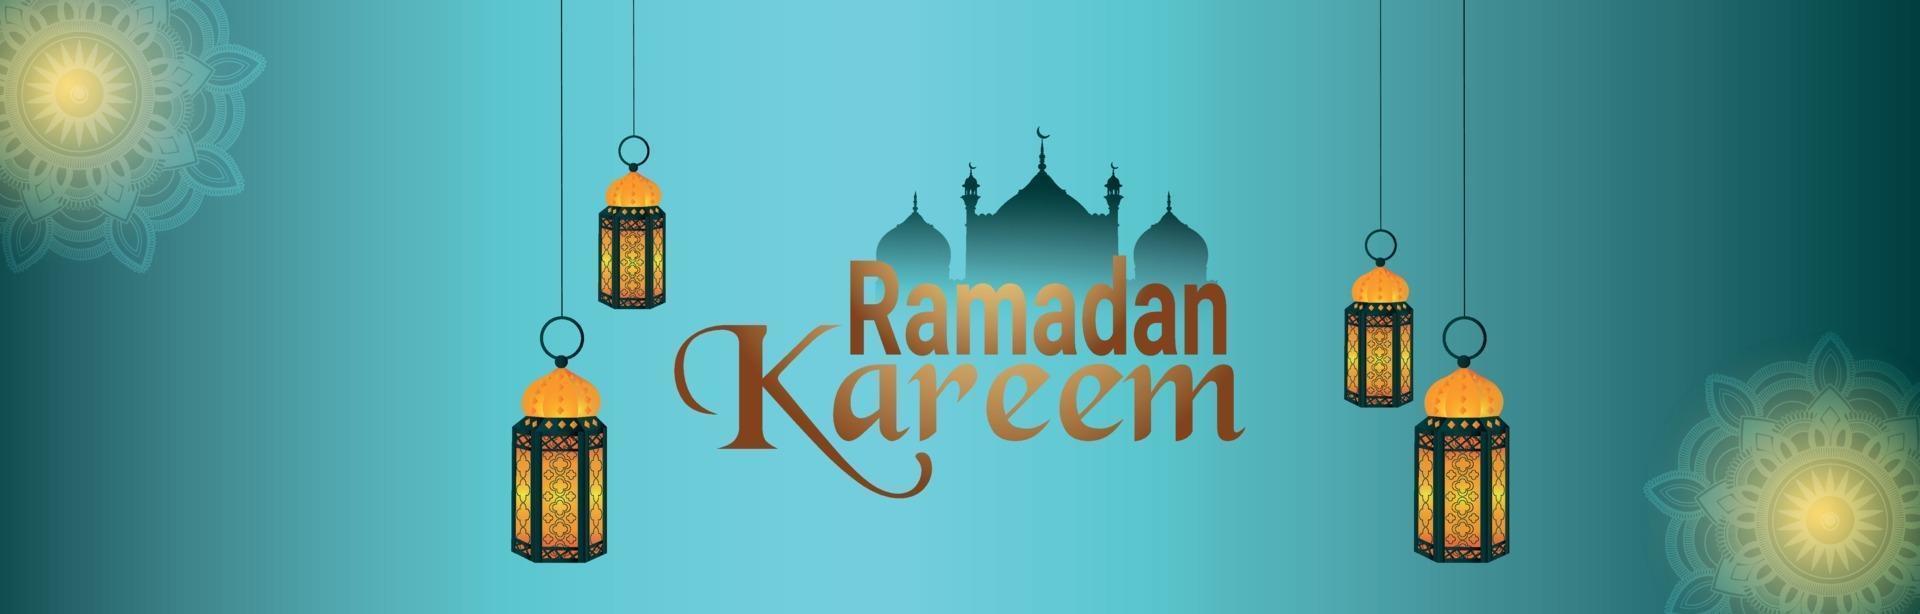 joyeux ramadan kareem bannière ou en-tête vecteur